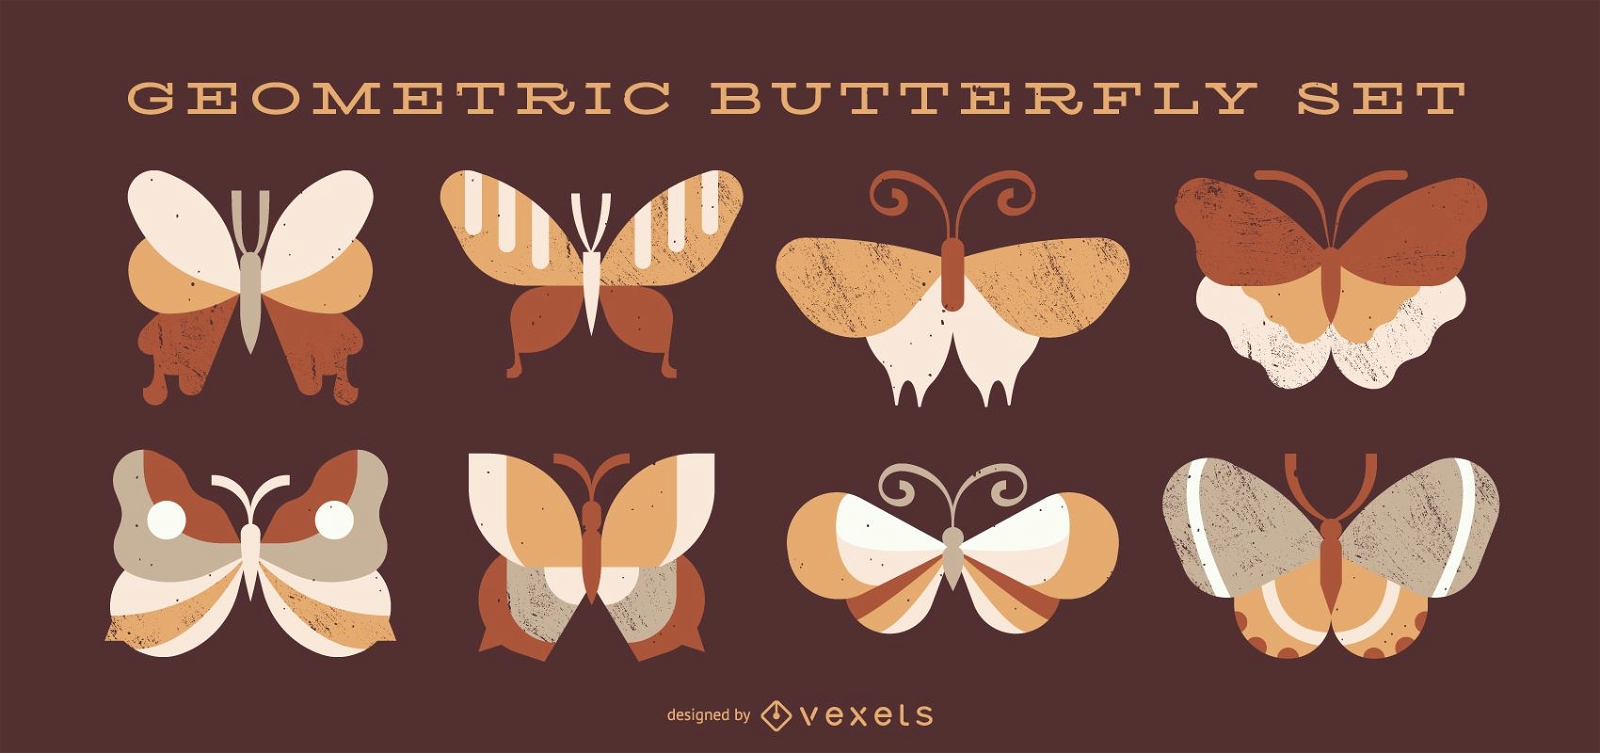 Geometric butterfly vector set